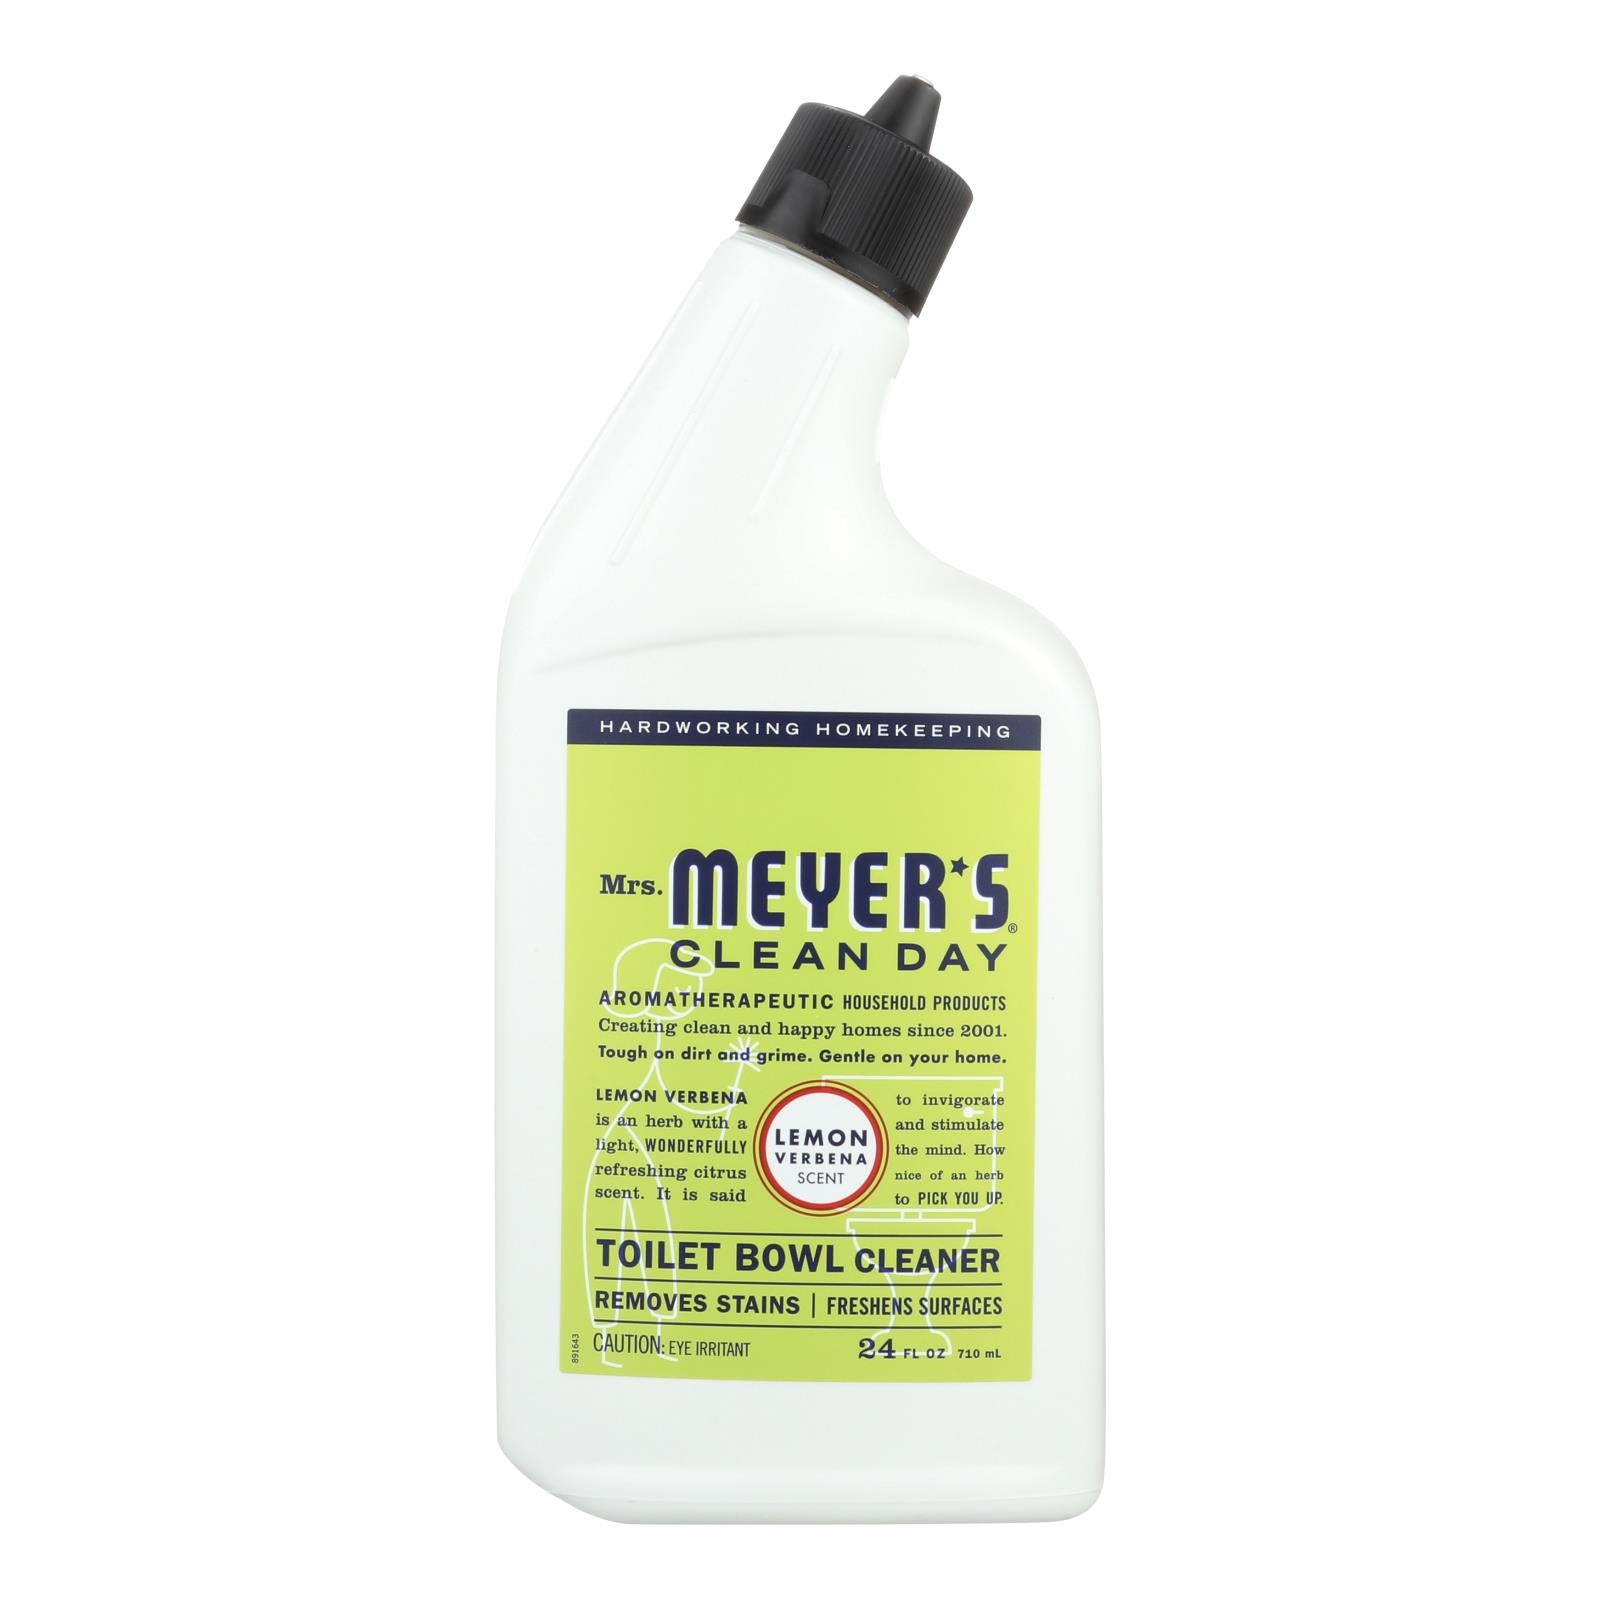 Mrs. Meyer's Clean Day - Toilet Bowl Cleaner - Lemon Verbena - 24 fl oz - Case of 6